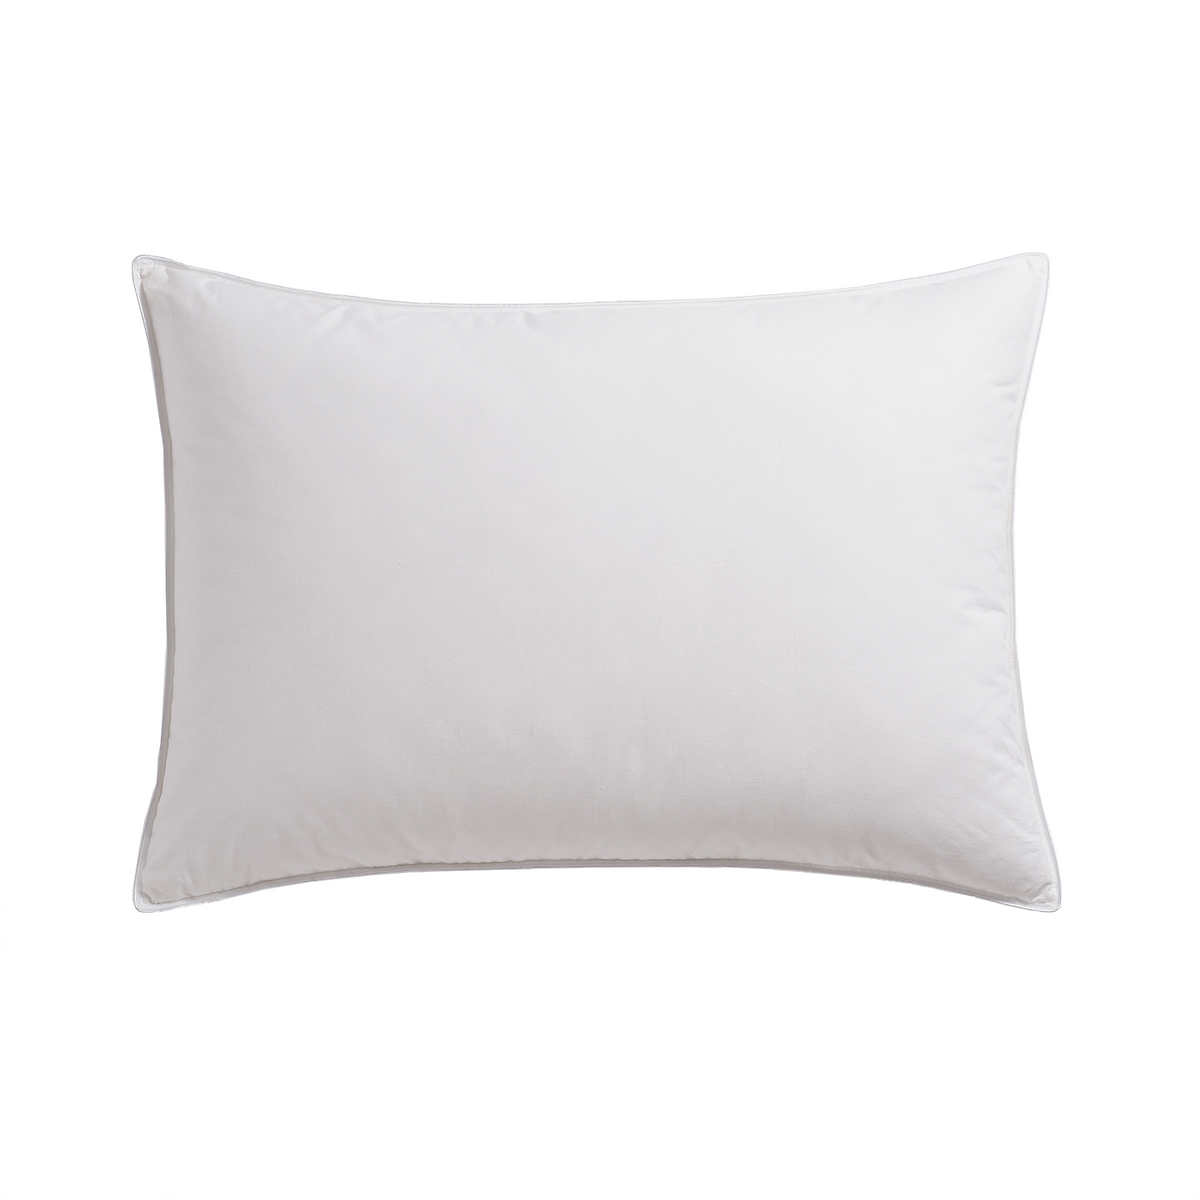 Whitex Feather Pillow Queen 20" x 30" 39 oz.